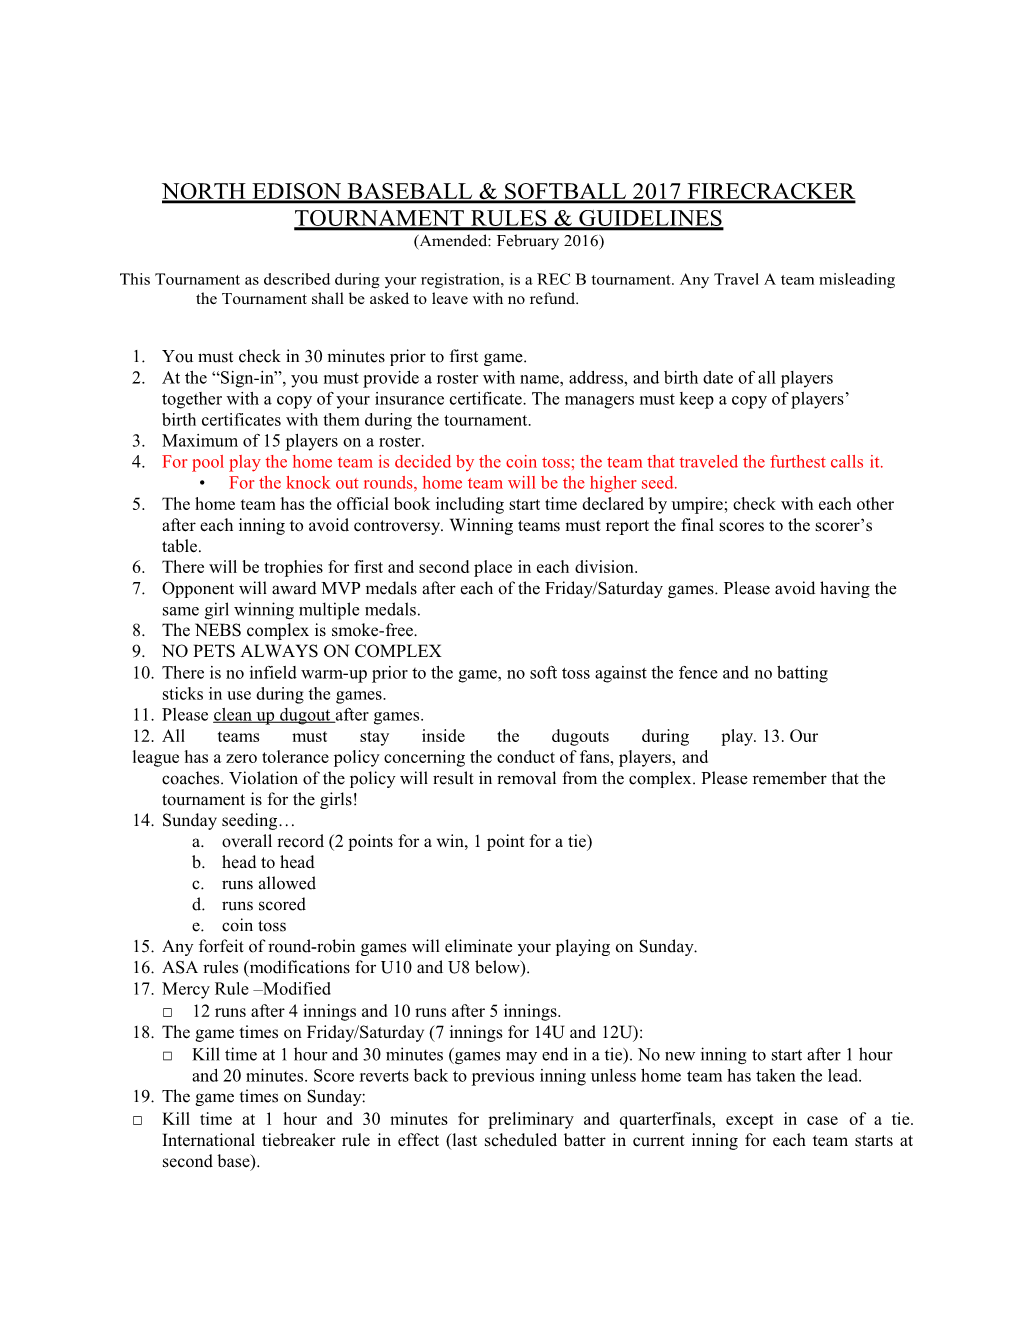 North Edison Baseball & Softball 2017 Firecracker Tournament Rules & Guidelines